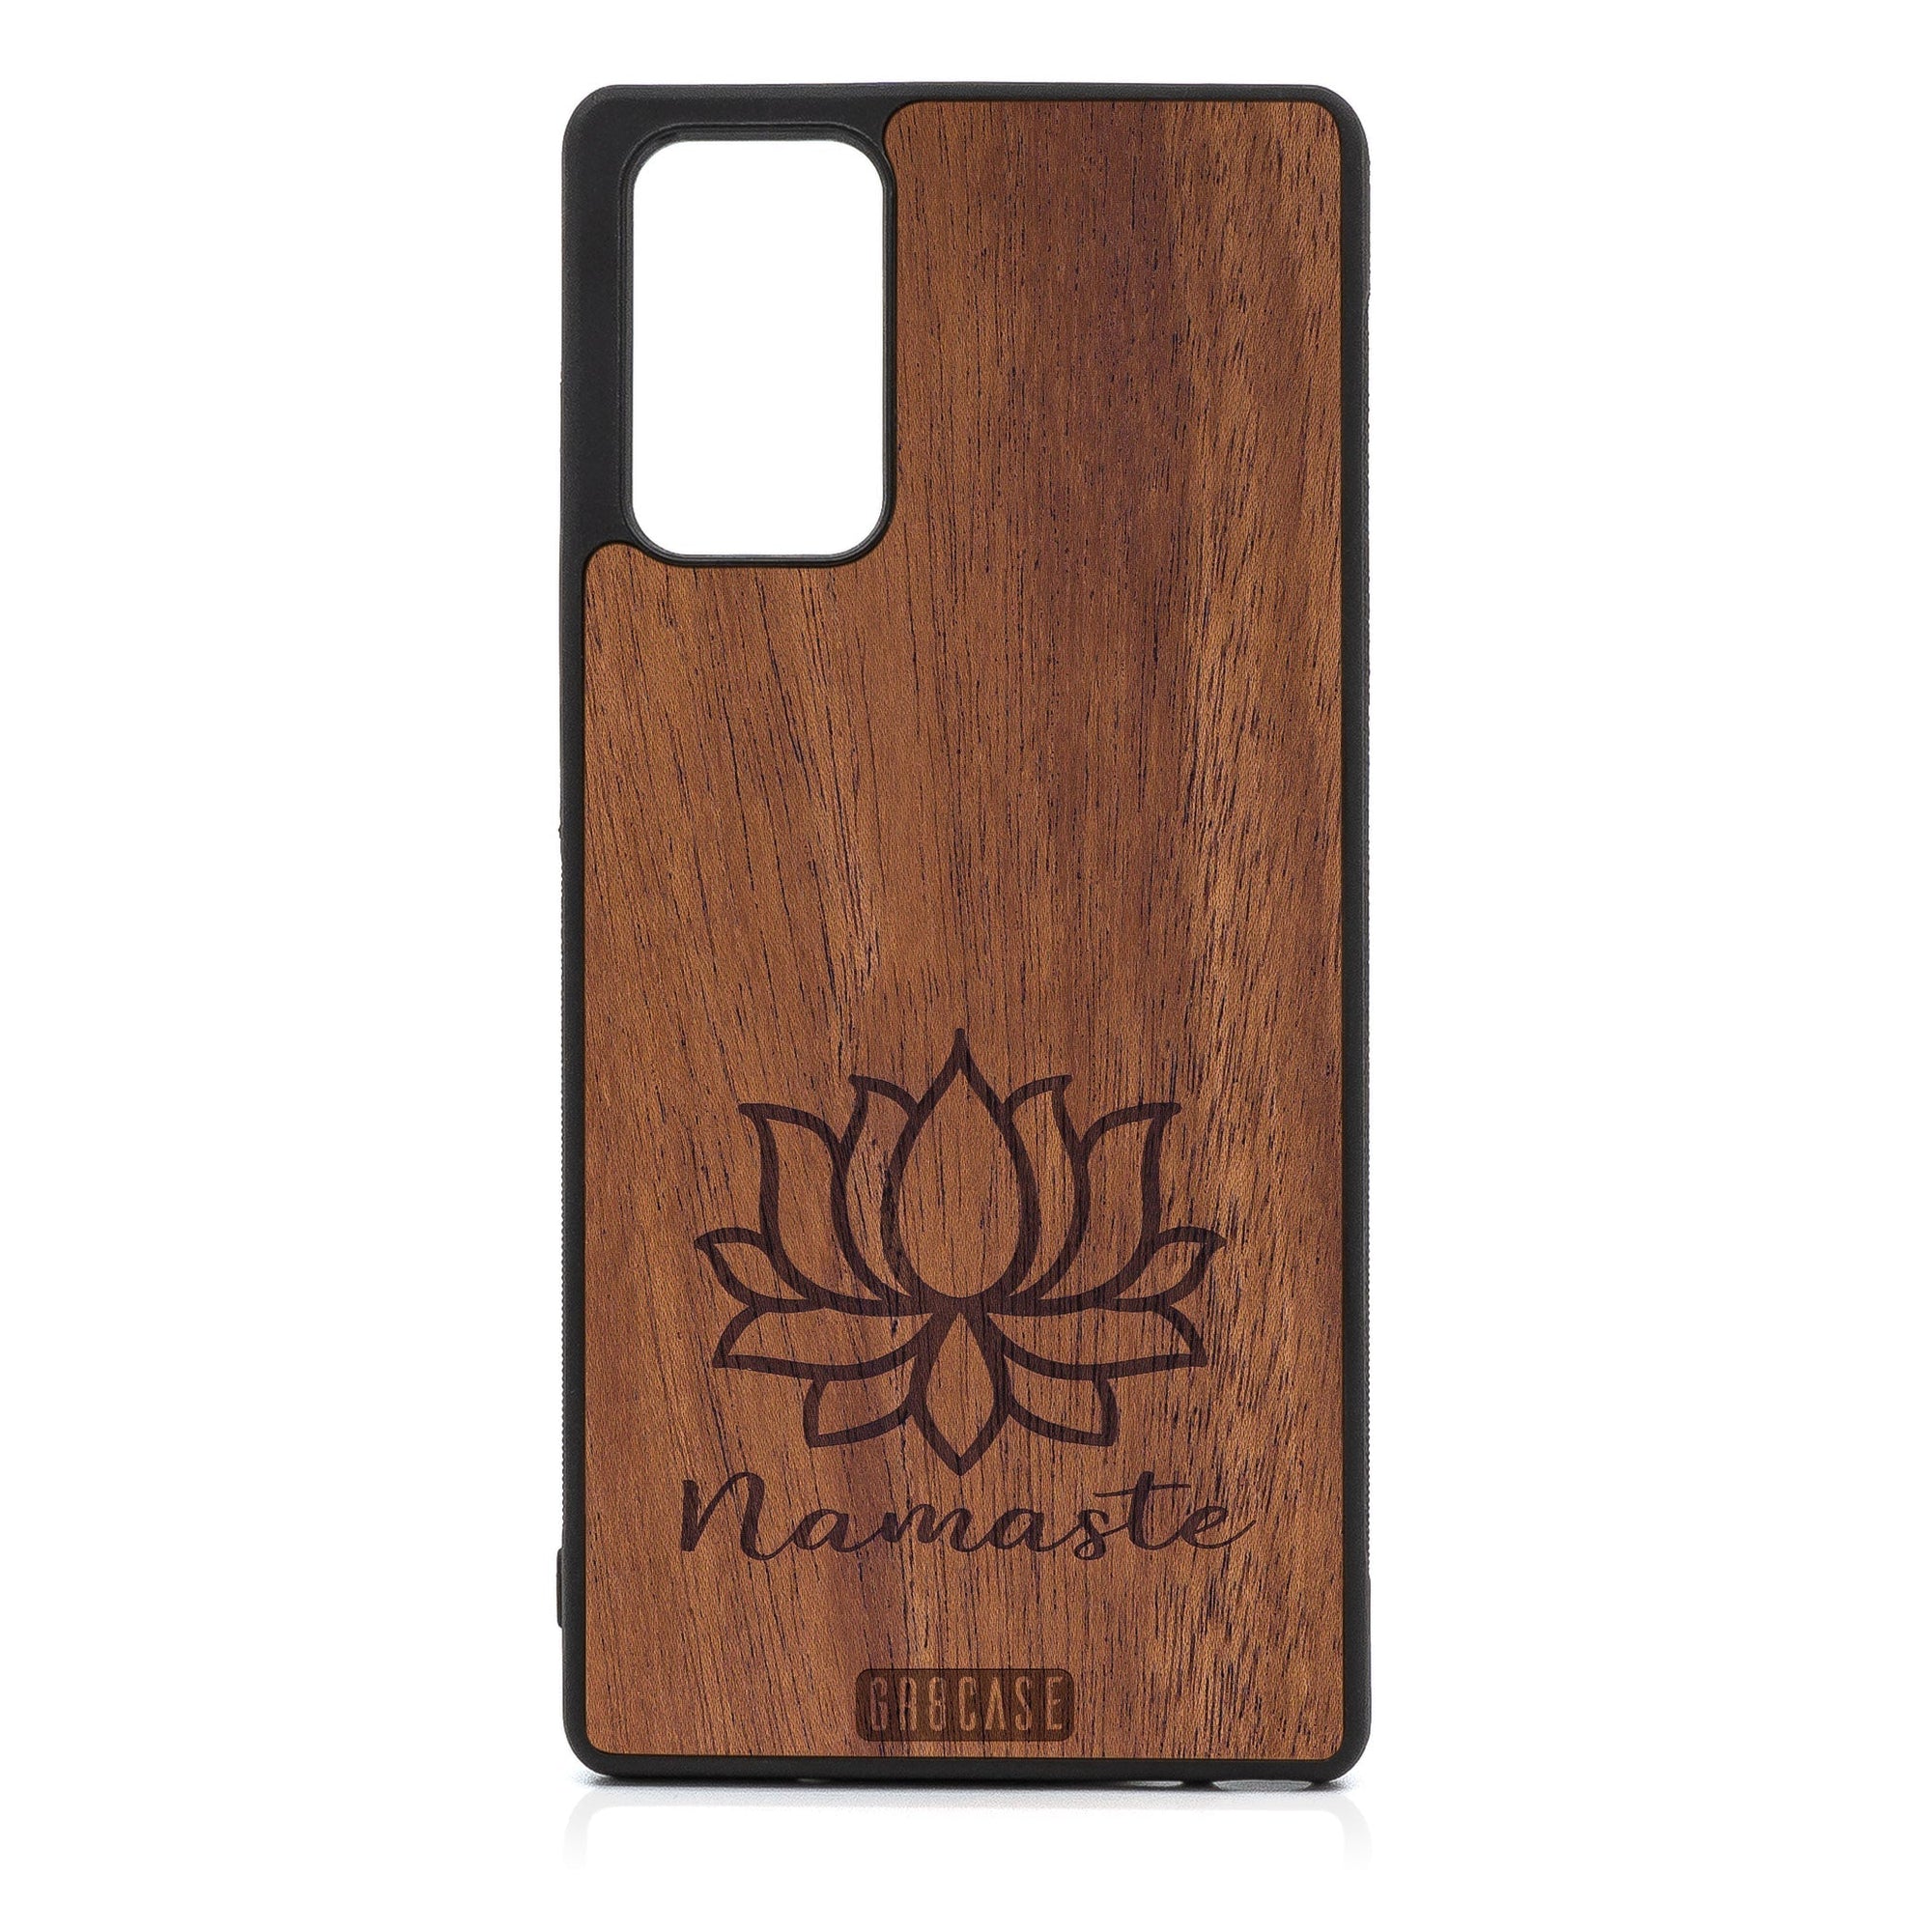 Namaste (Lotus Flower) Design Wood Case For Samsung Galaxy A71 5G